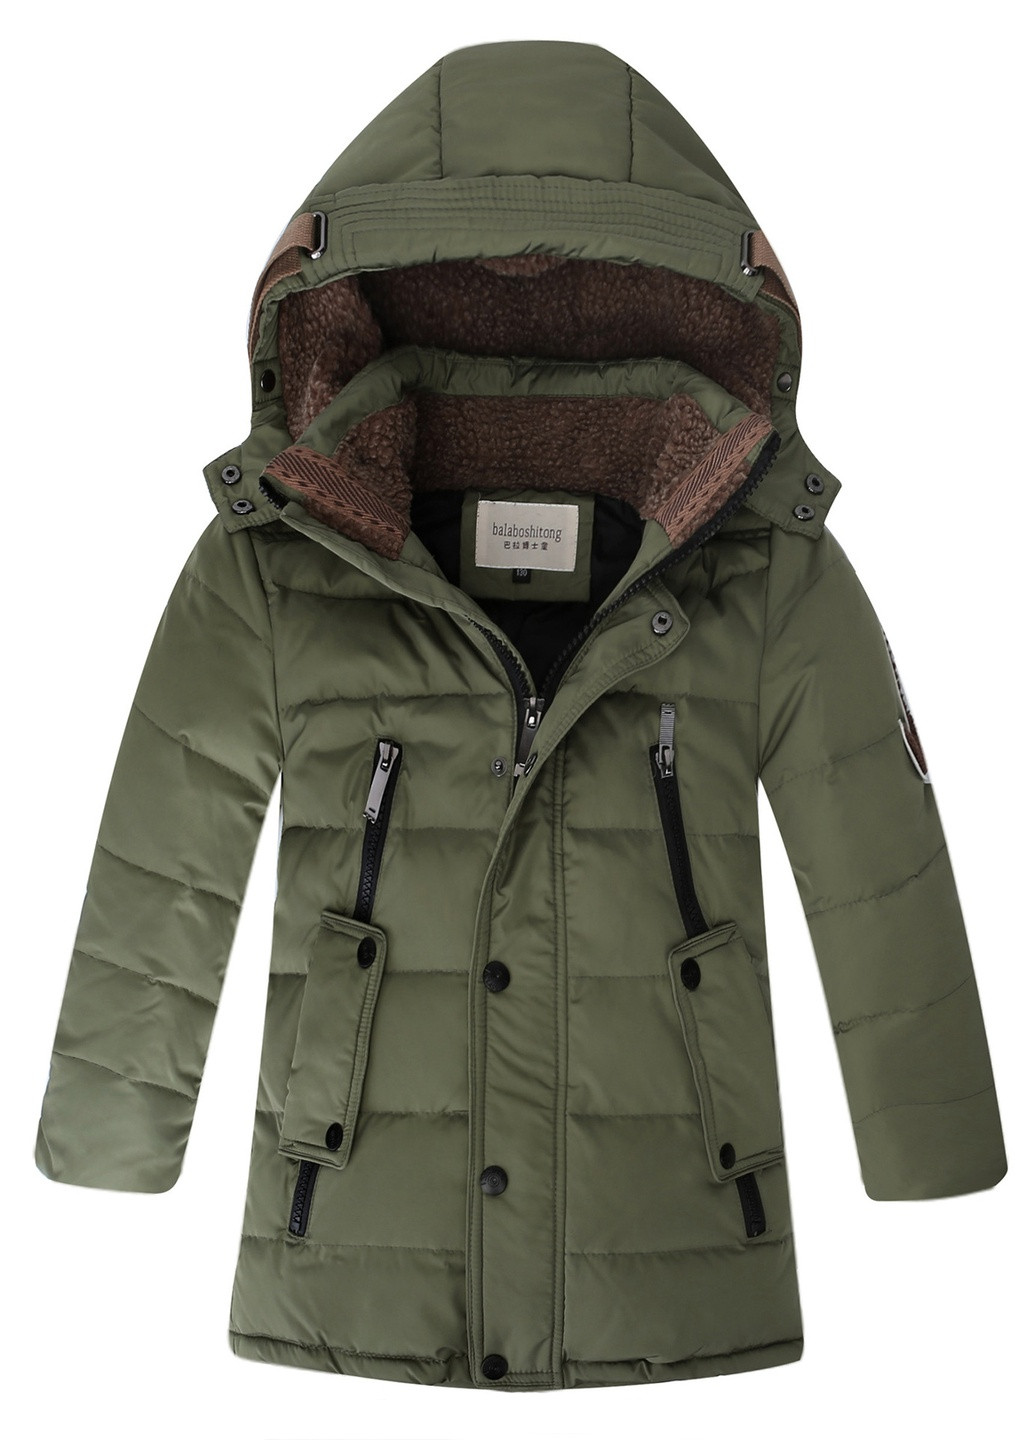 Зеленая зимняя пуховая зимняя куртка для мальчика DobraMAMA